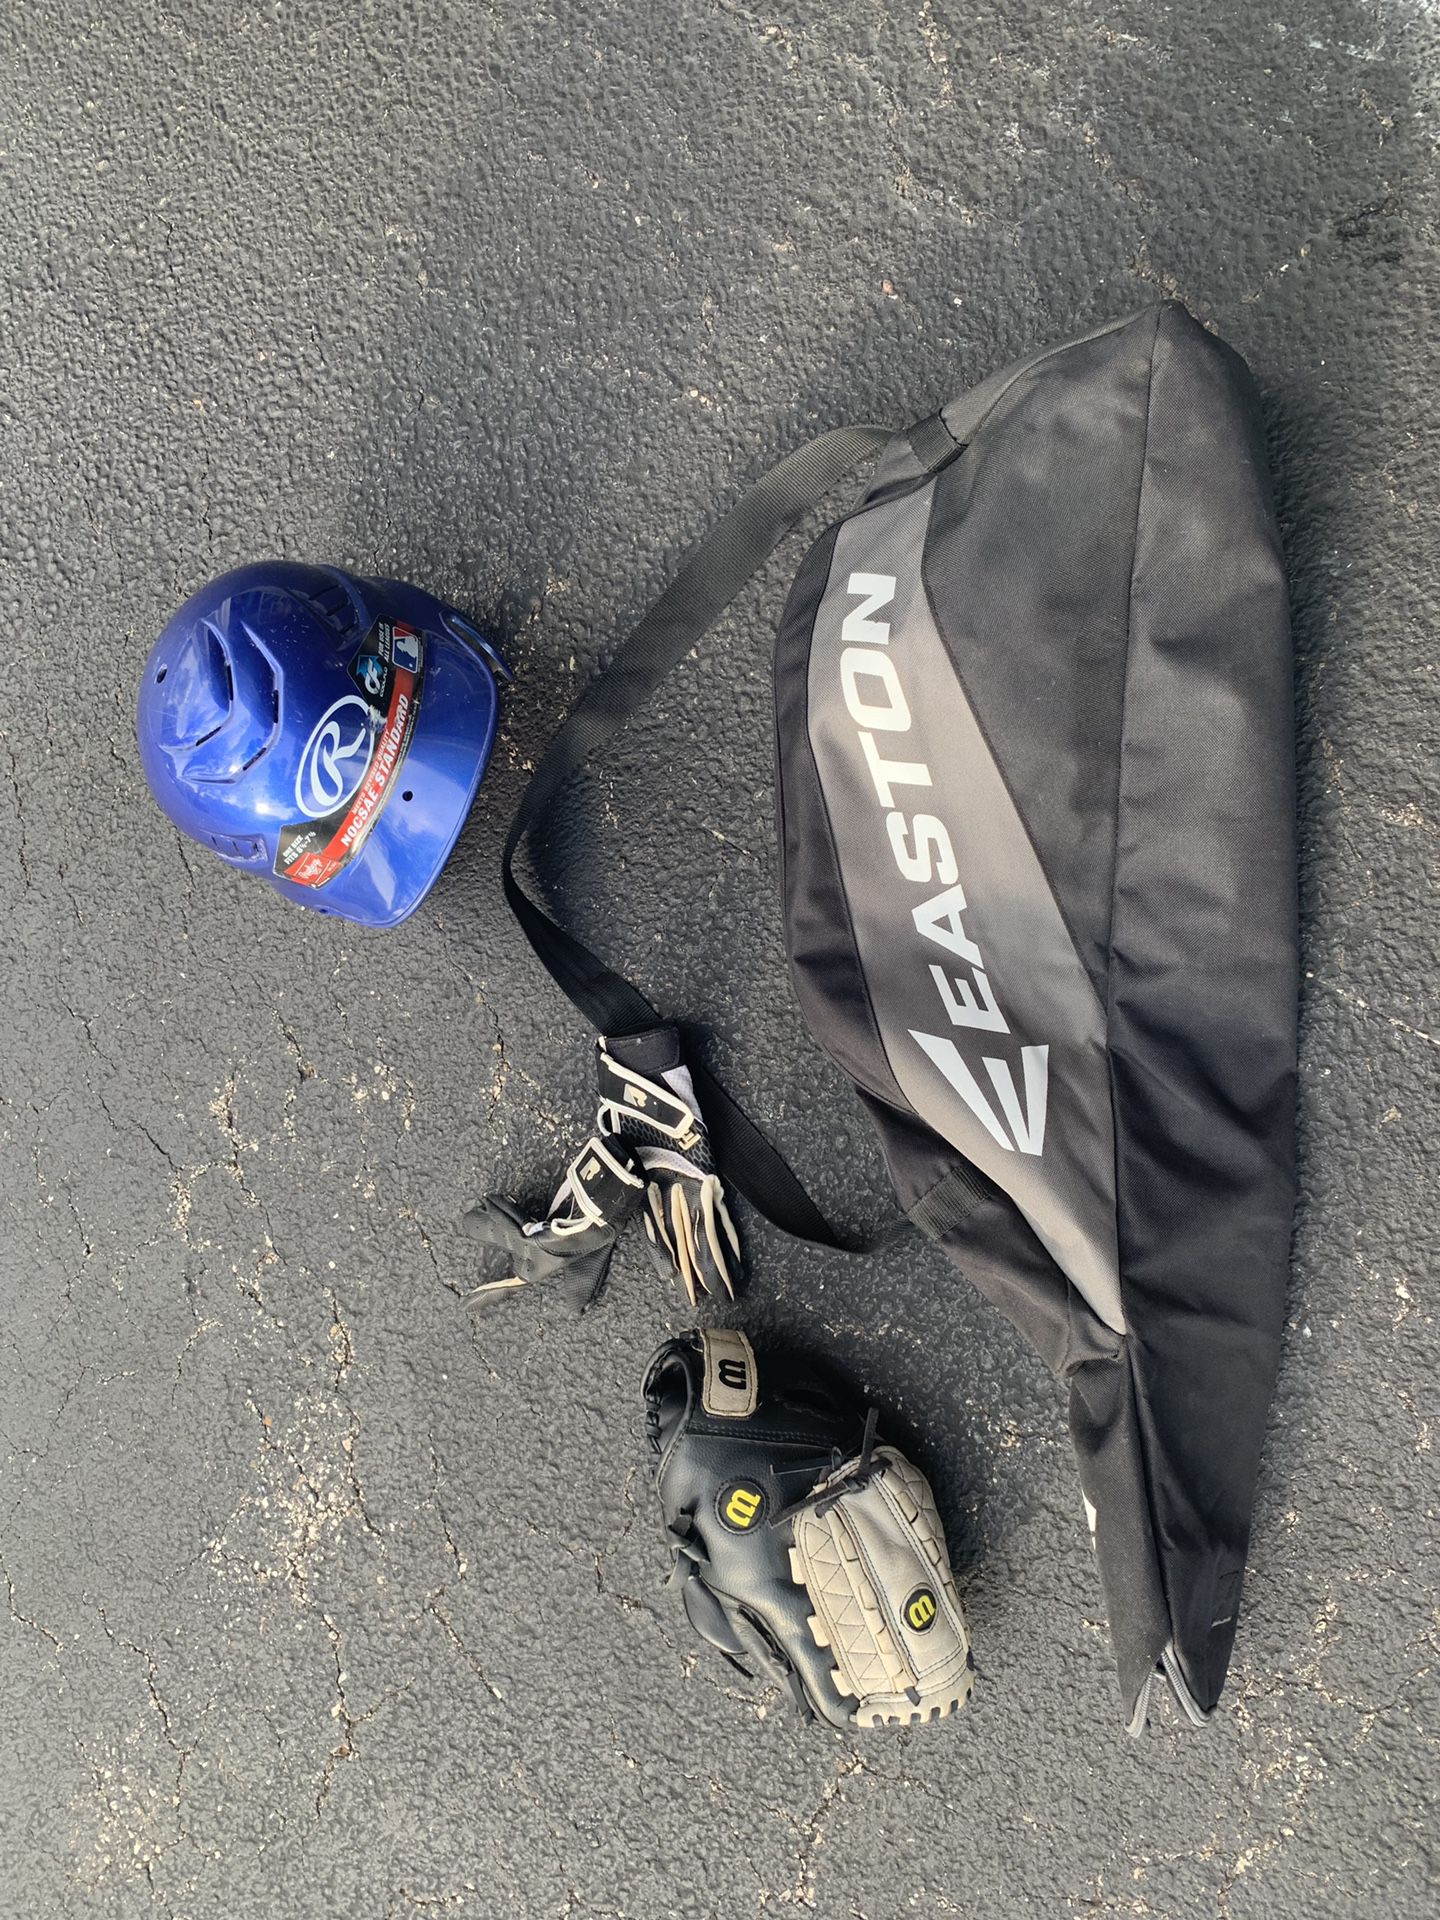 Baseball glove, bat gloves, and Helmet with bag